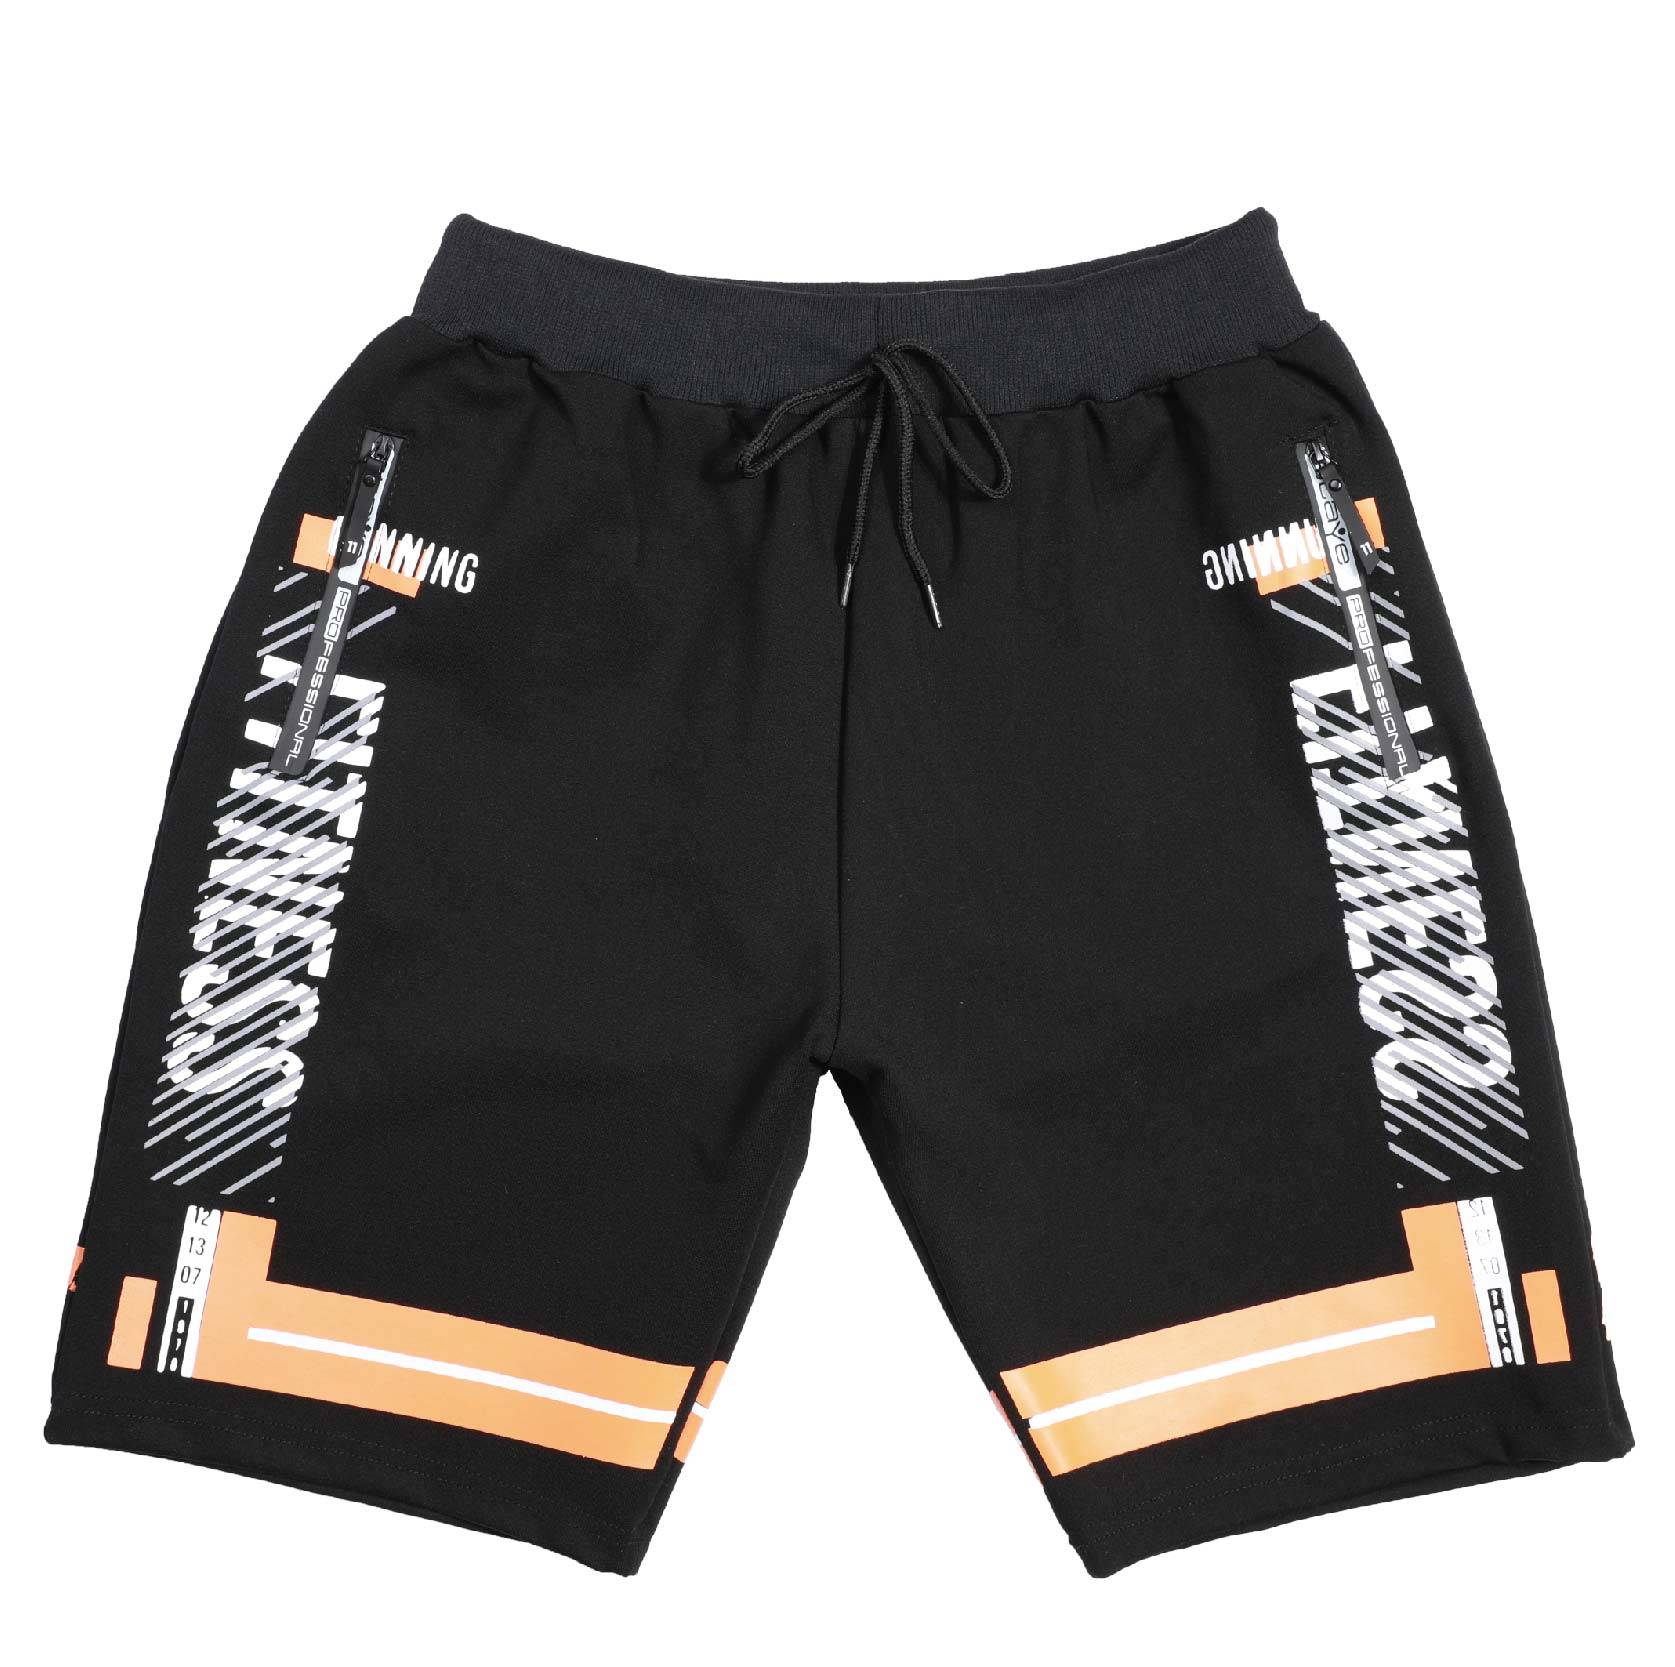 Popular Design for Men Long Coat - Ngozi Men’s Outdoor Lightweight Quick Dry Hiking Shorts/ Sports Casual Shorts – Fullerton